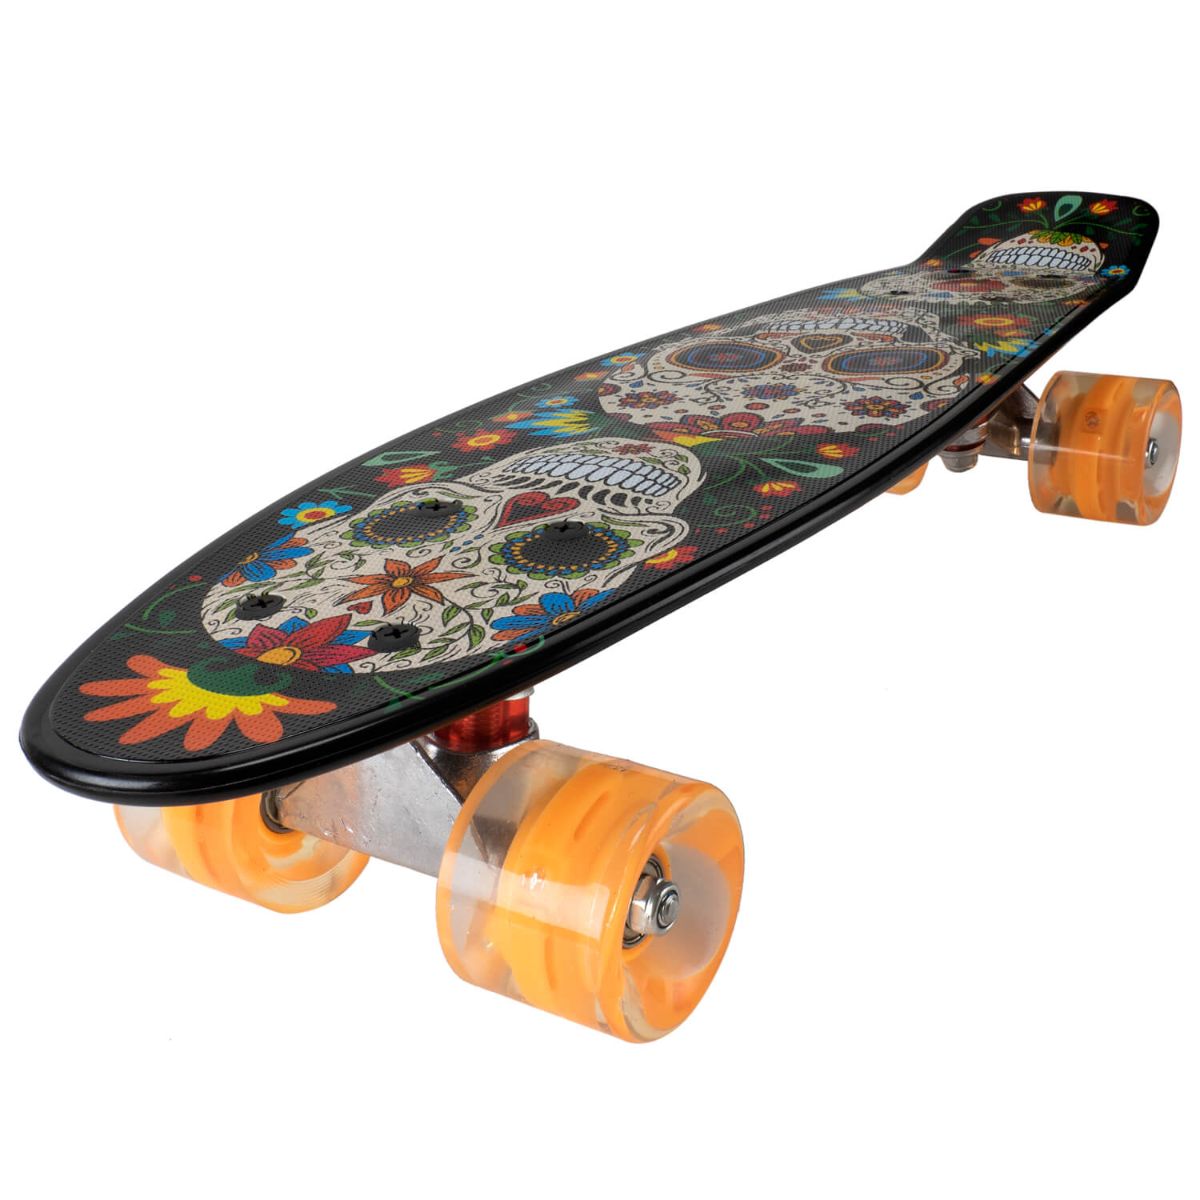 Penny board Action One, Cu roti luminoase, 22 cm, ABEC-7 PU, Aluminium 90 kg, Santa Muerte Role si skateboard imagine 2022